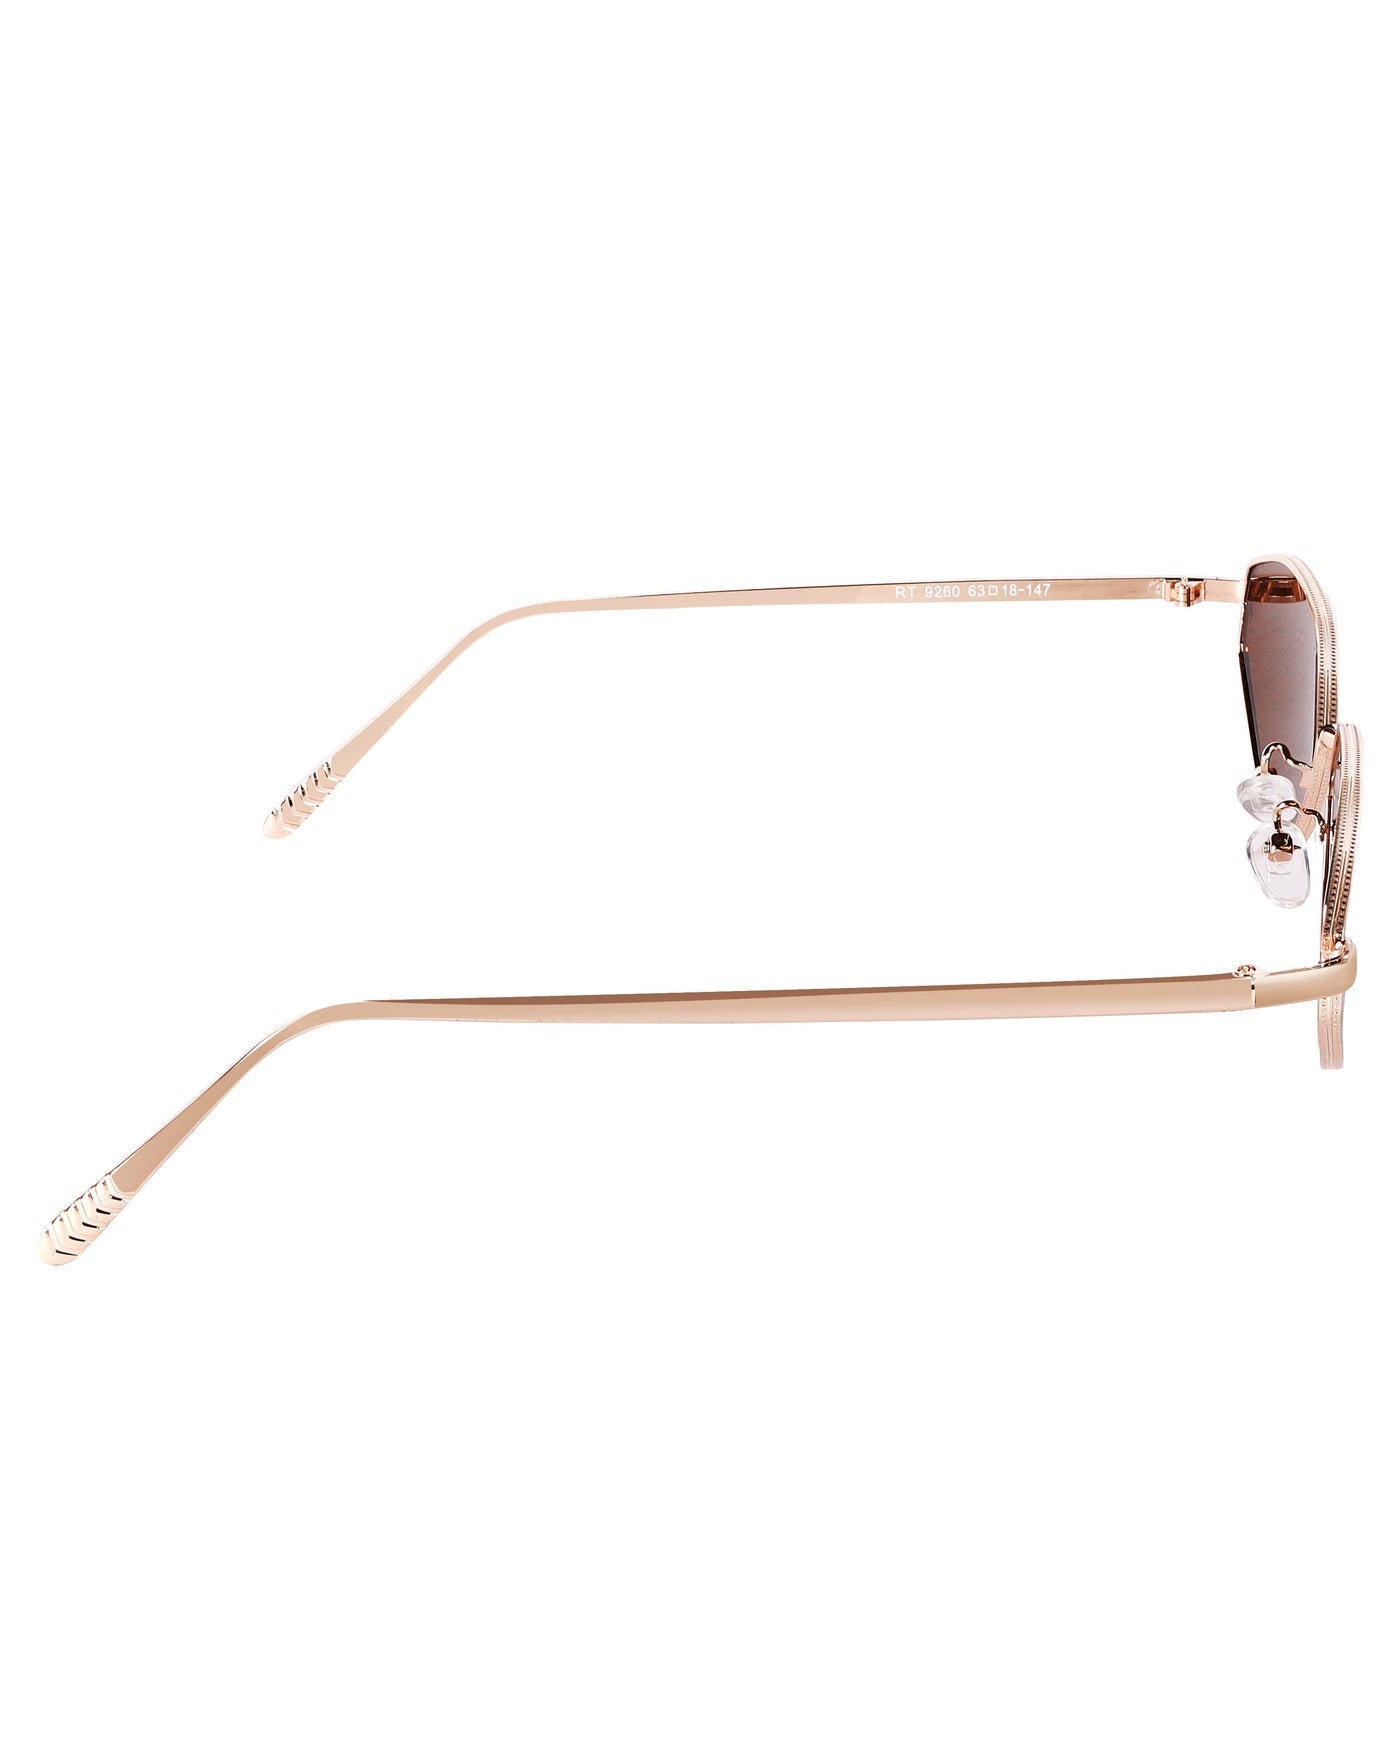 Classic Designer Brown UV Protected Cat Eyes Sunglasses RT057